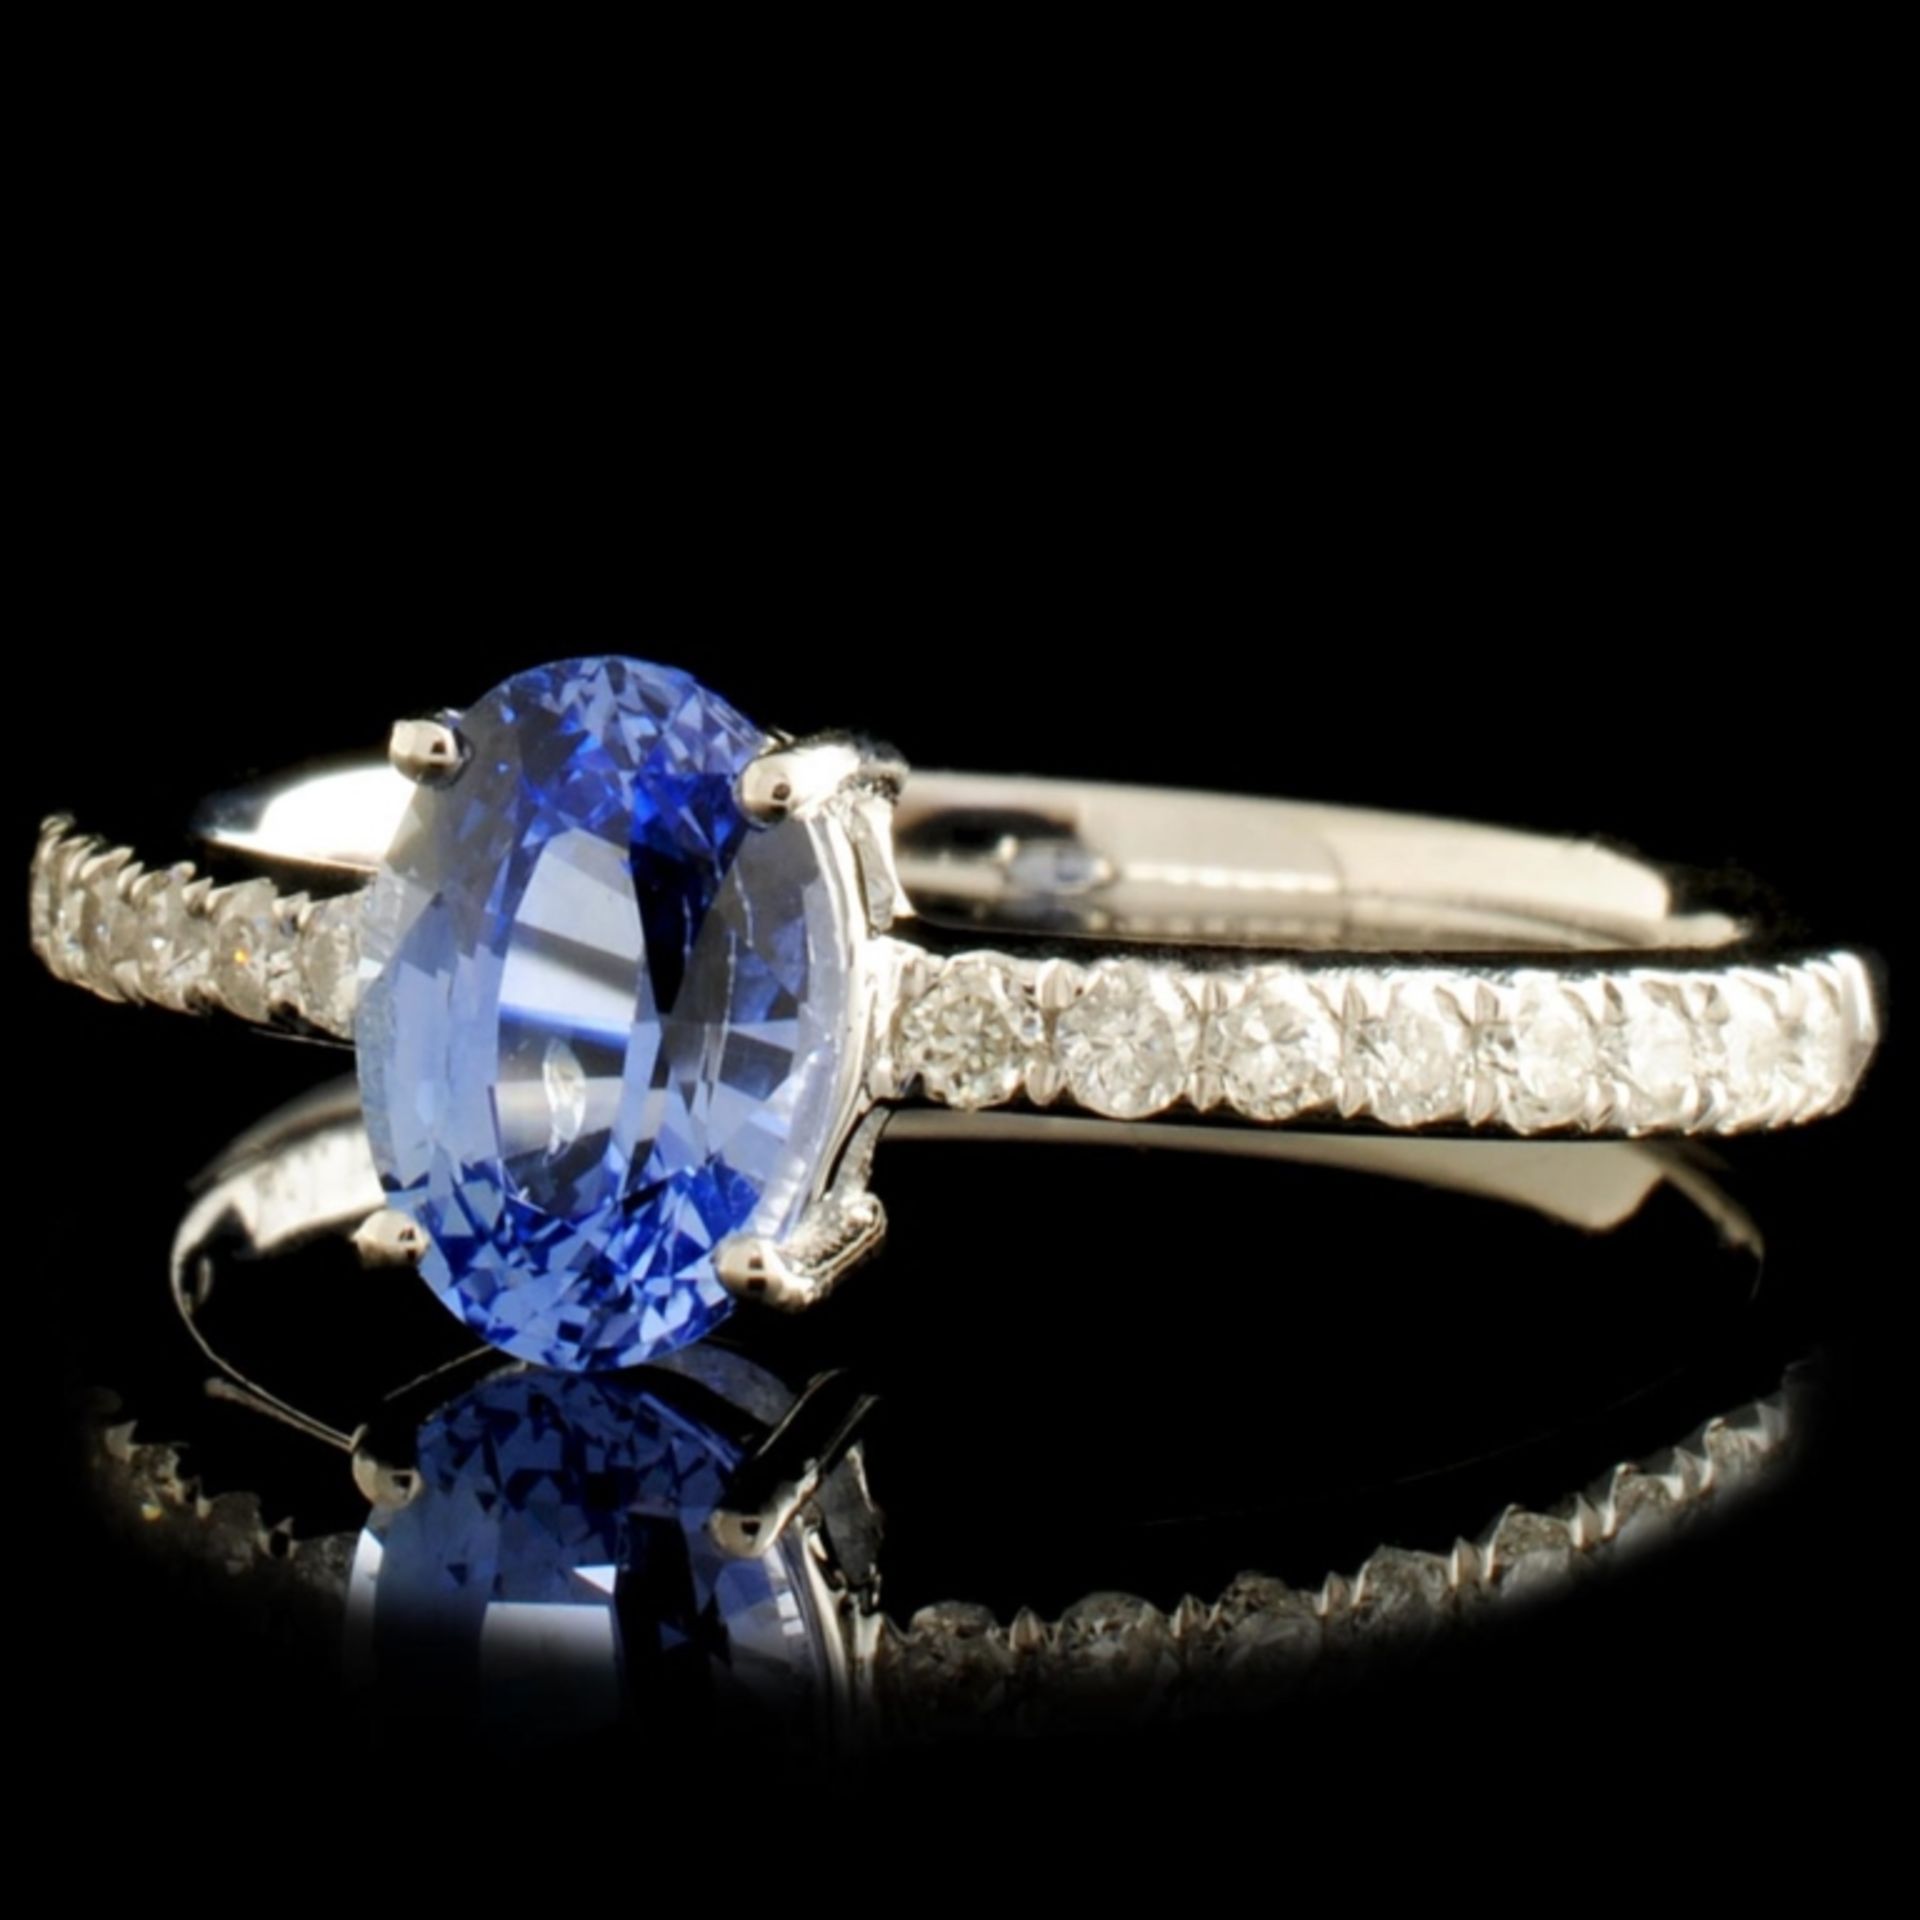 14K Gold 1.12ct Sapphire & 0.21ctw Diamond Ring - Image 2 of 5